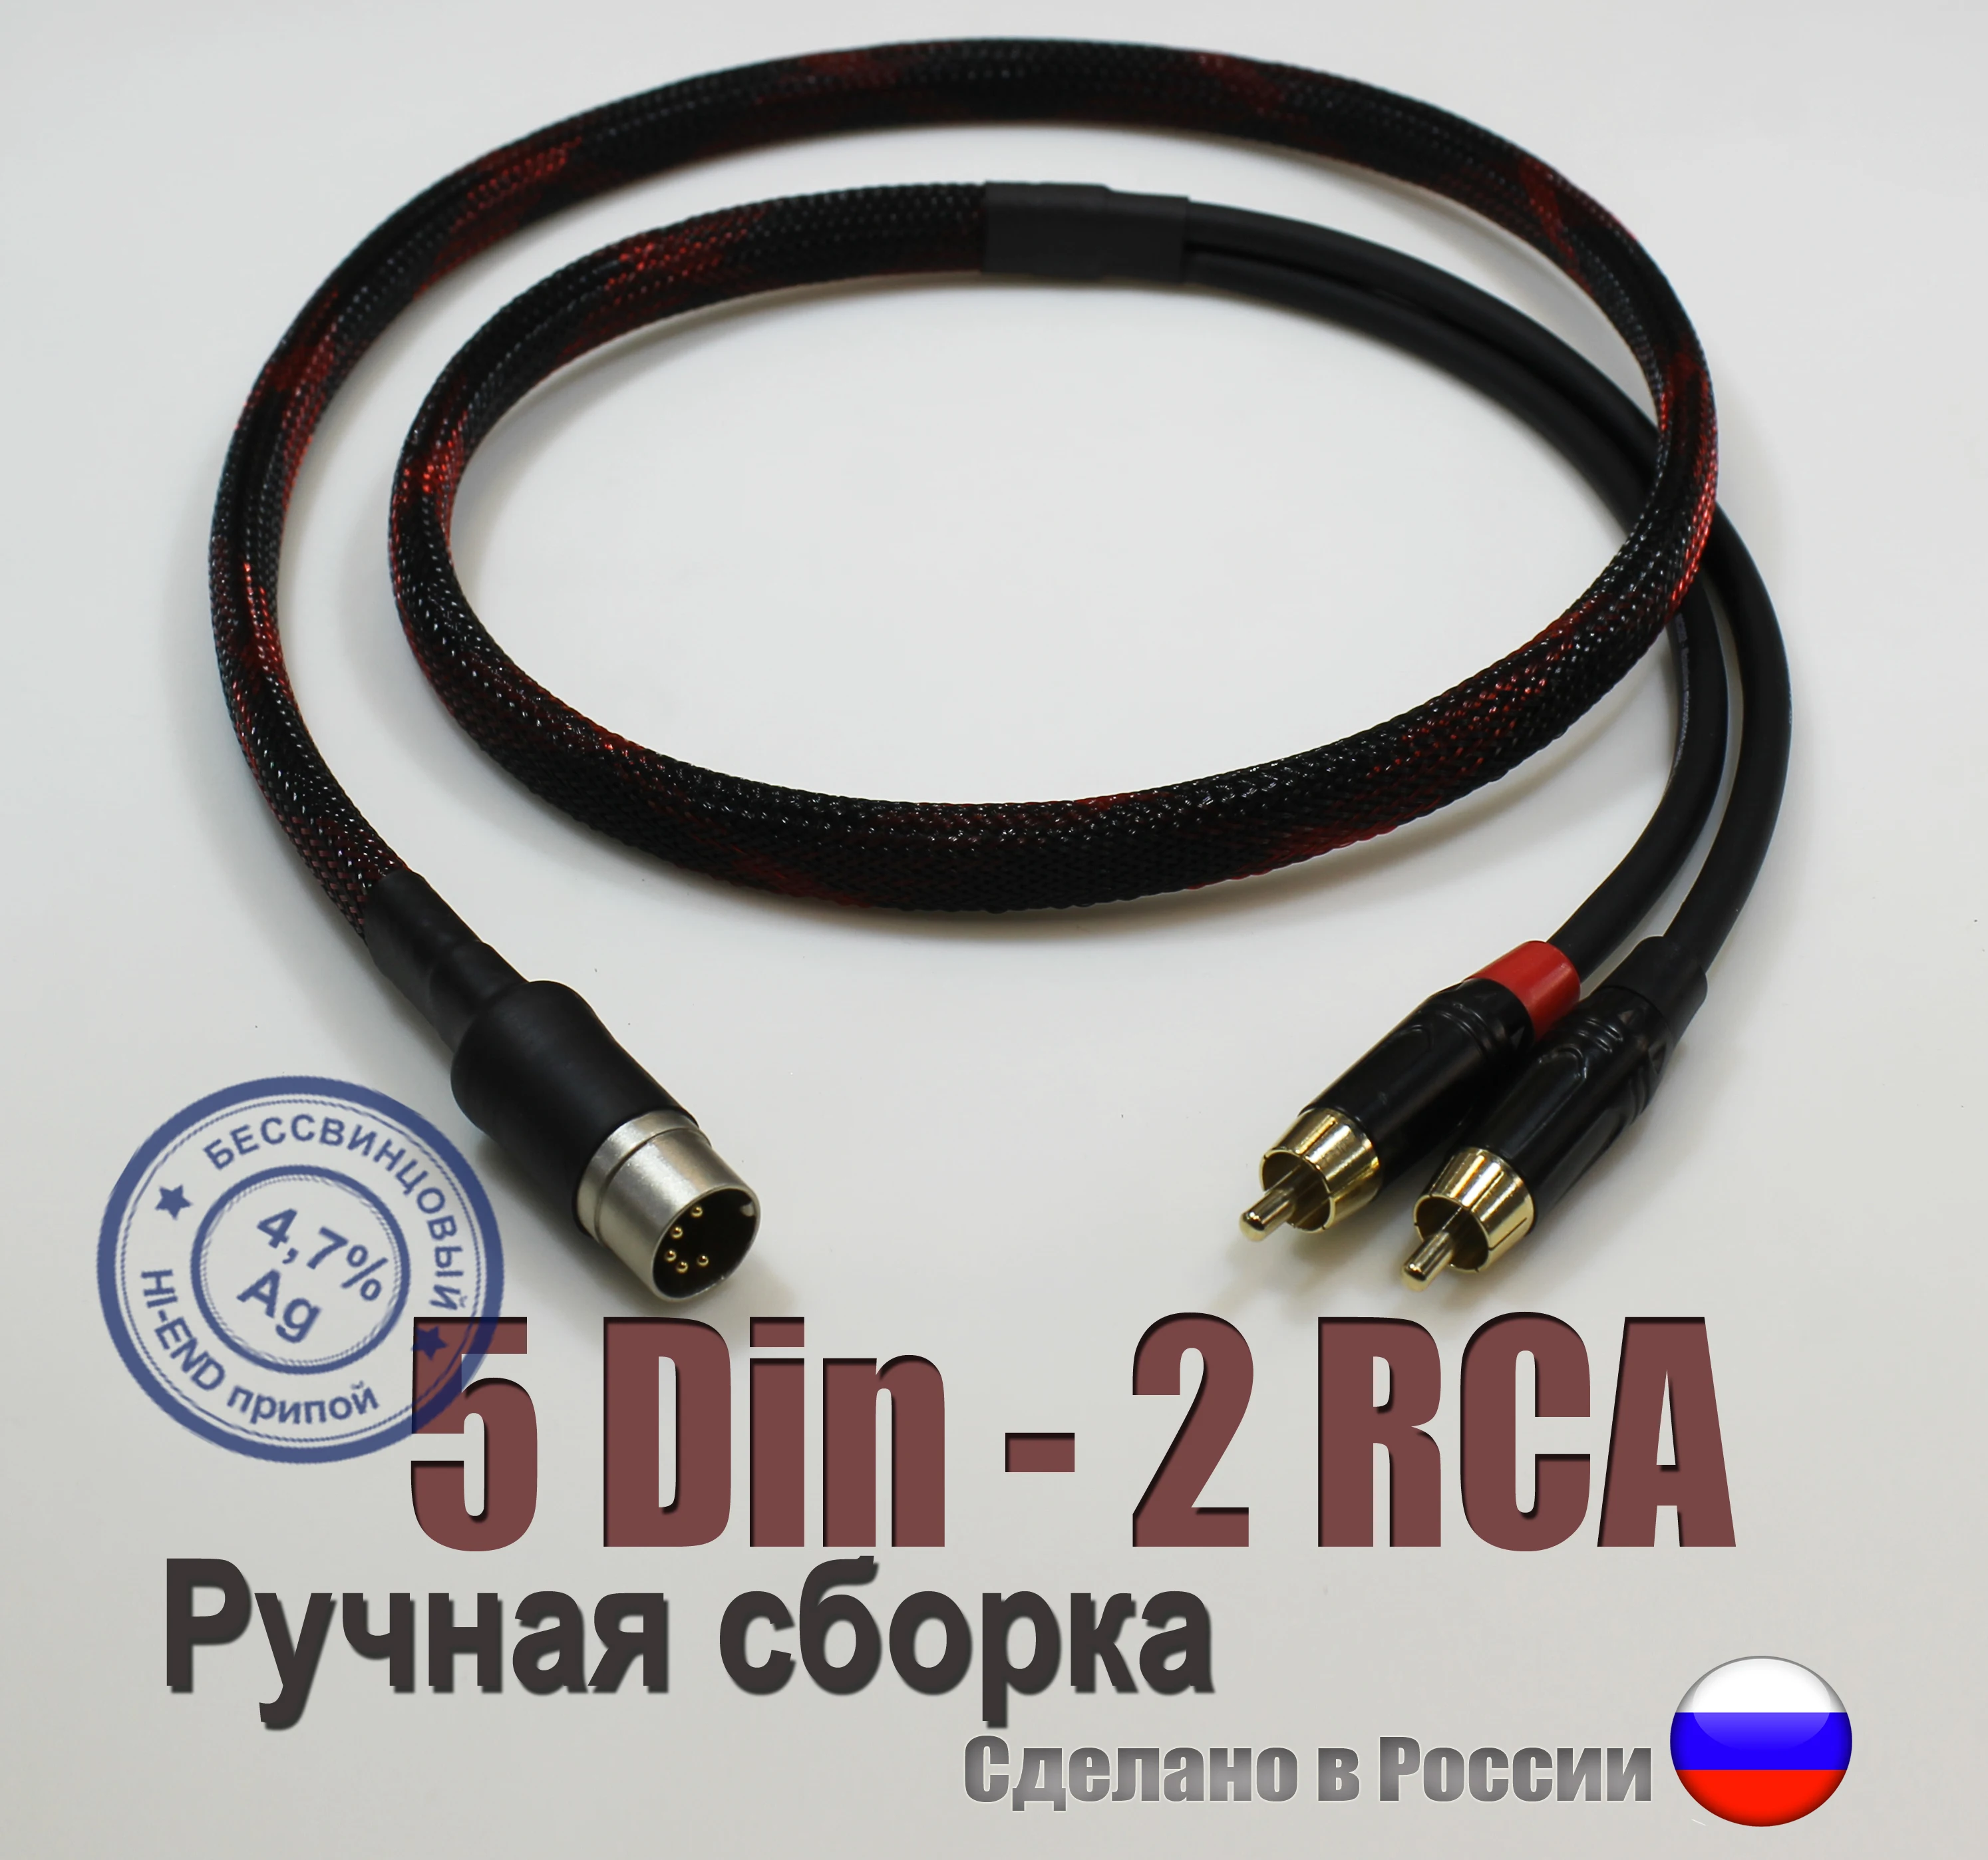 Фото 5 Din Pin - 2 Rca Hi-Fi Phono межблочный провод | Электроника